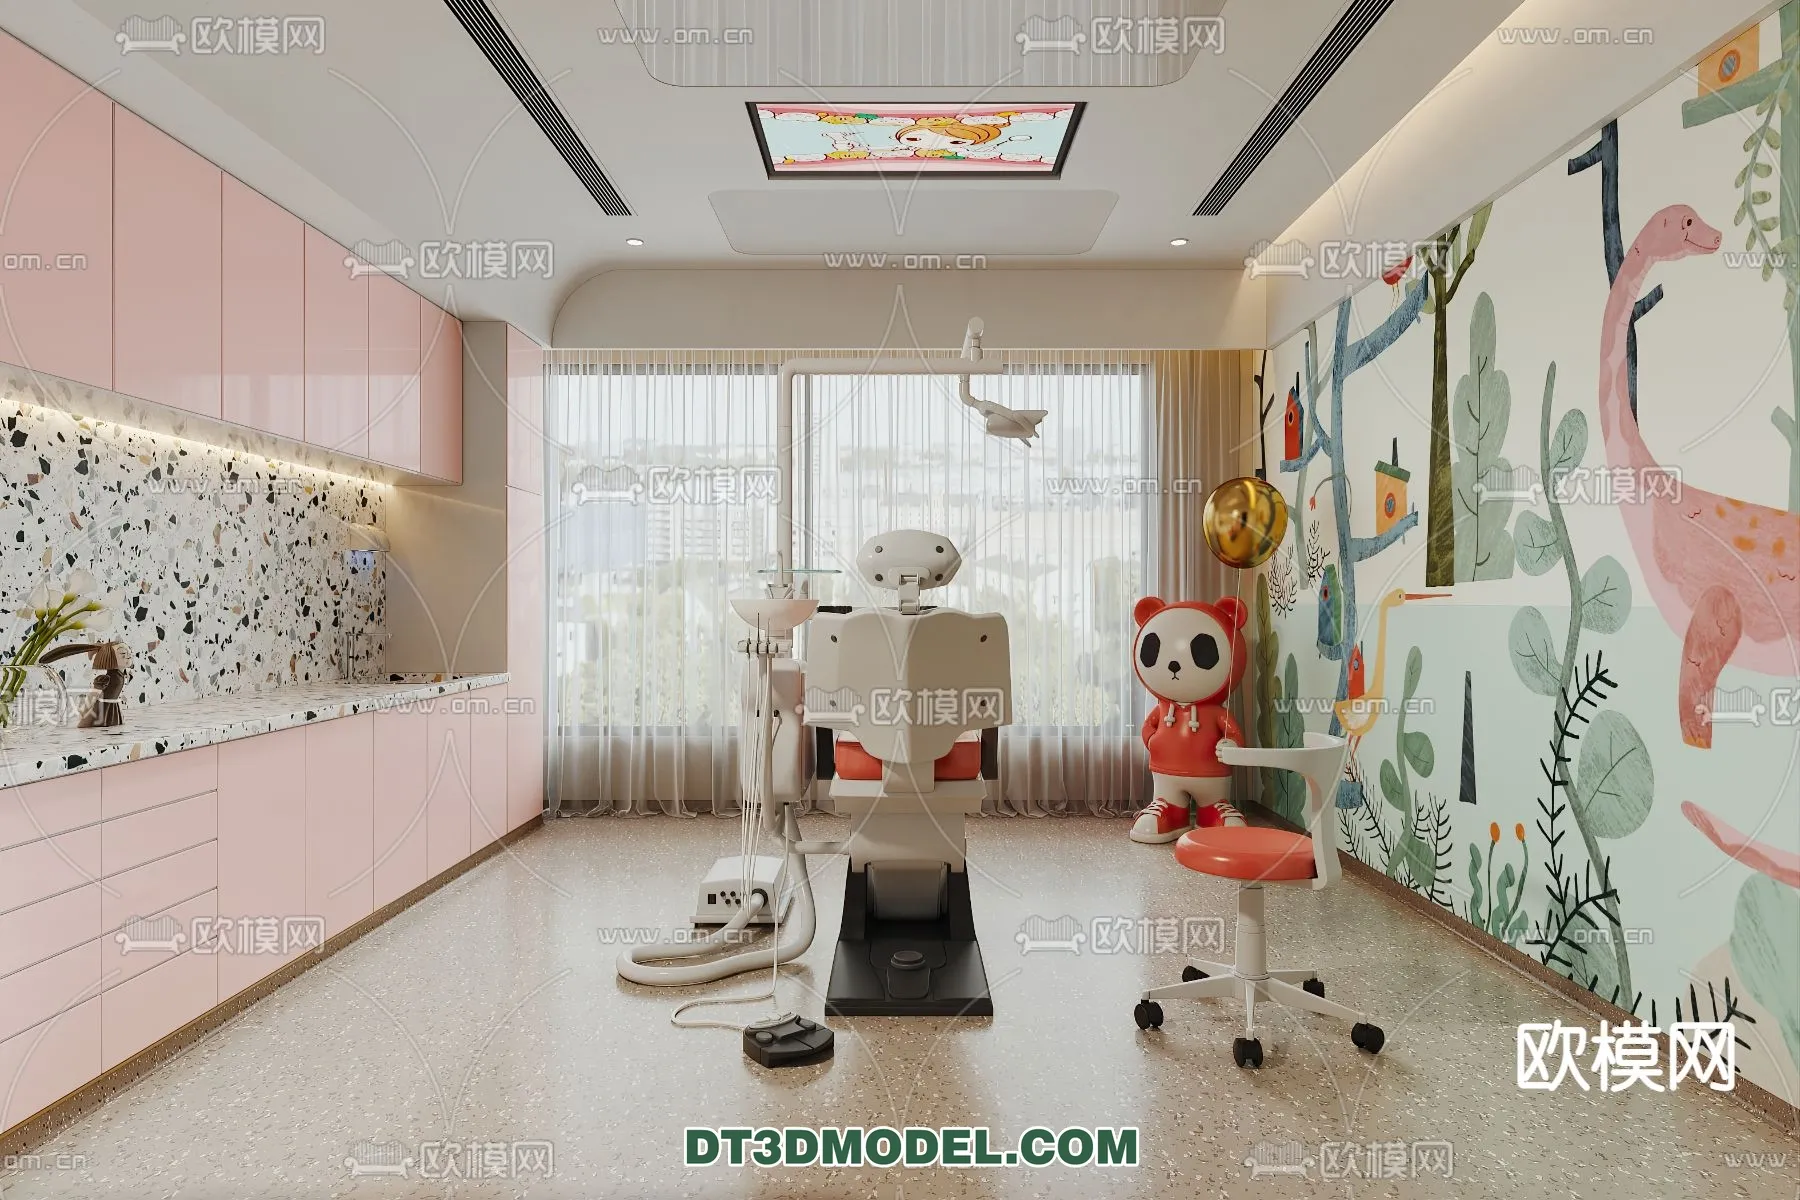 HOSPITAL 3D SCENES – MODERN – 0117